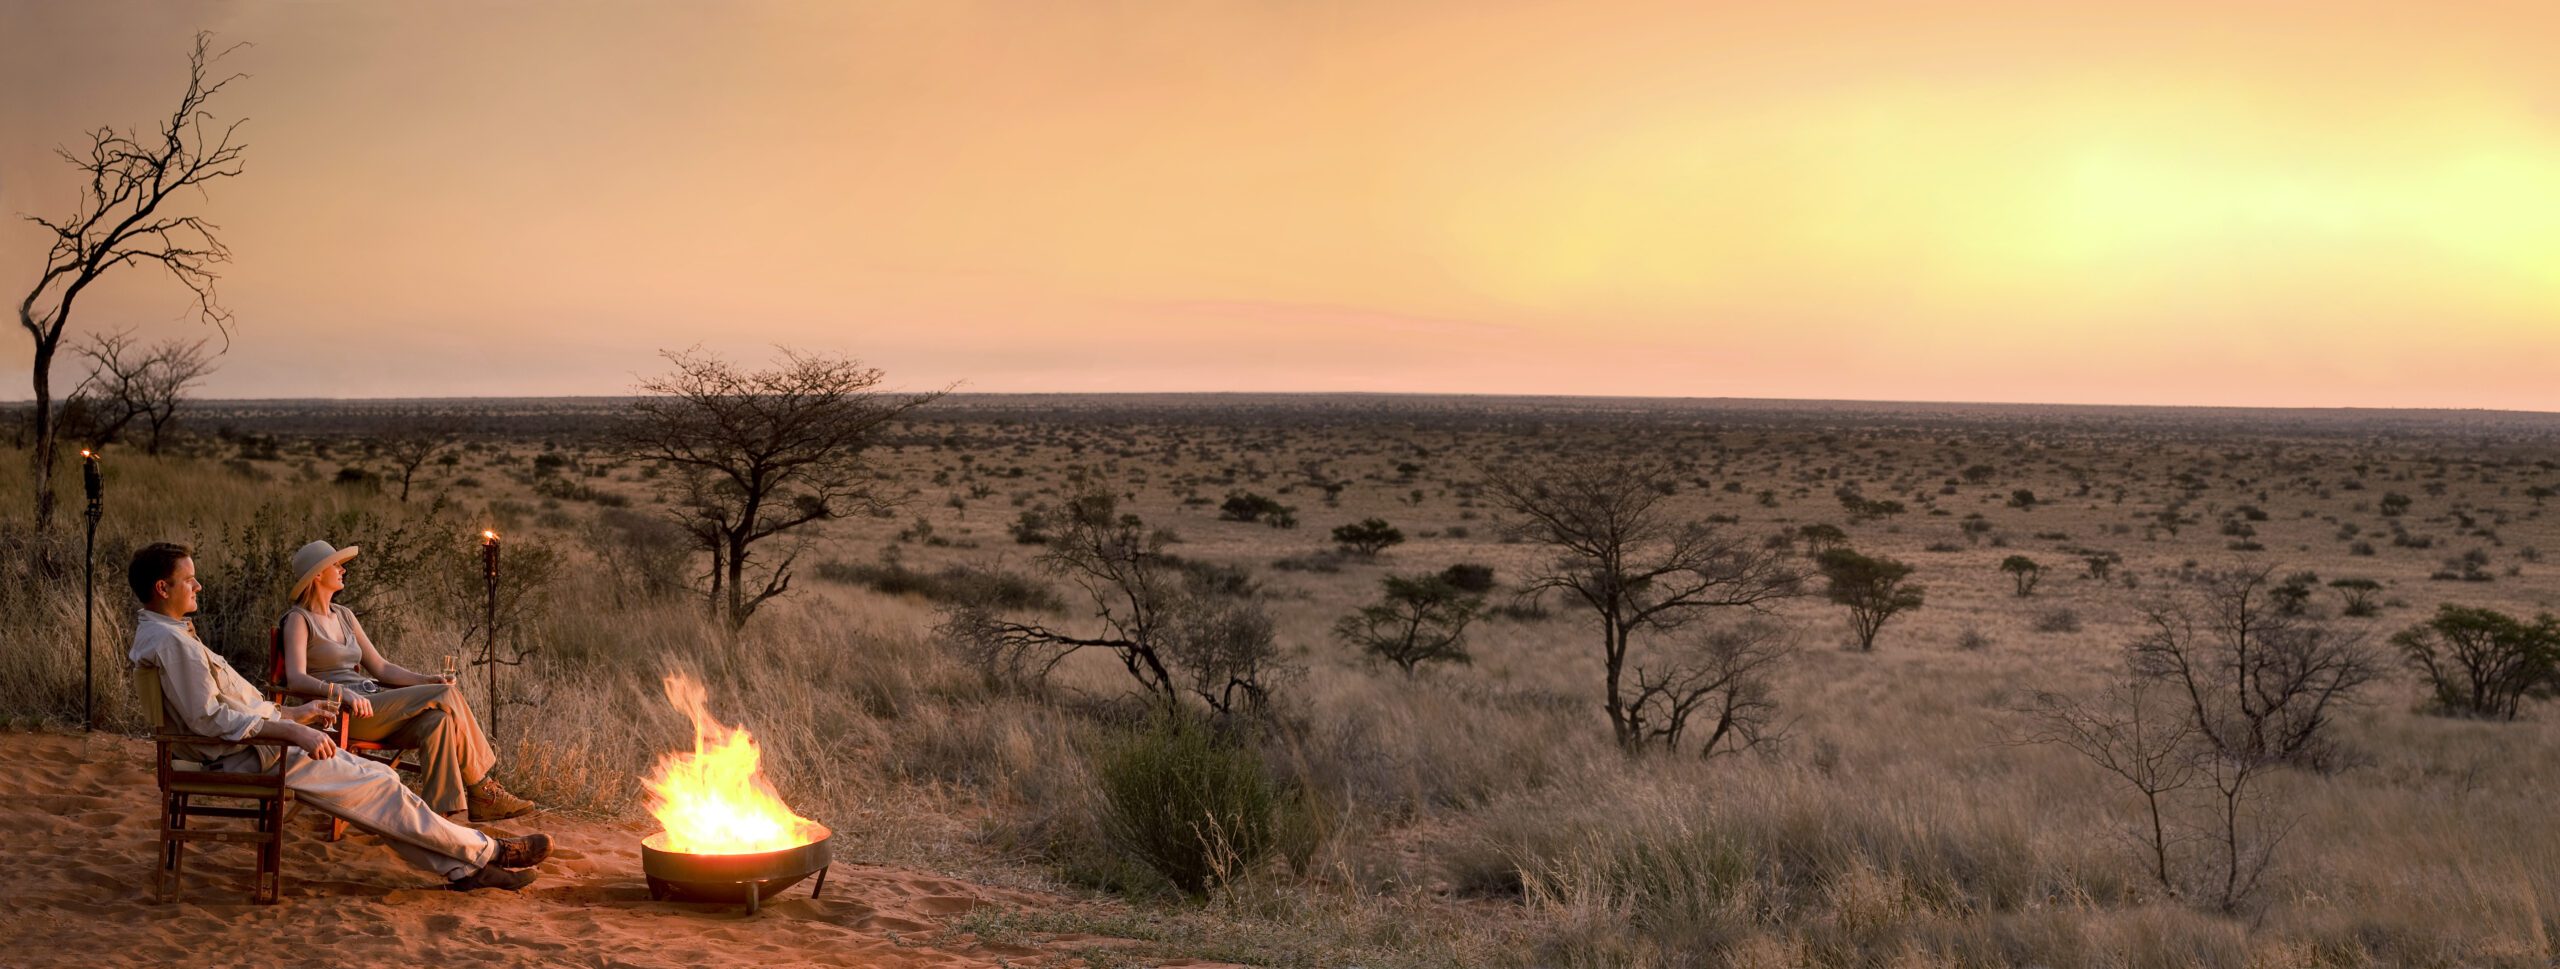 Elephants, Rhinos & Meerkats in South Africa, Tswalu Sunset over the Kalahari